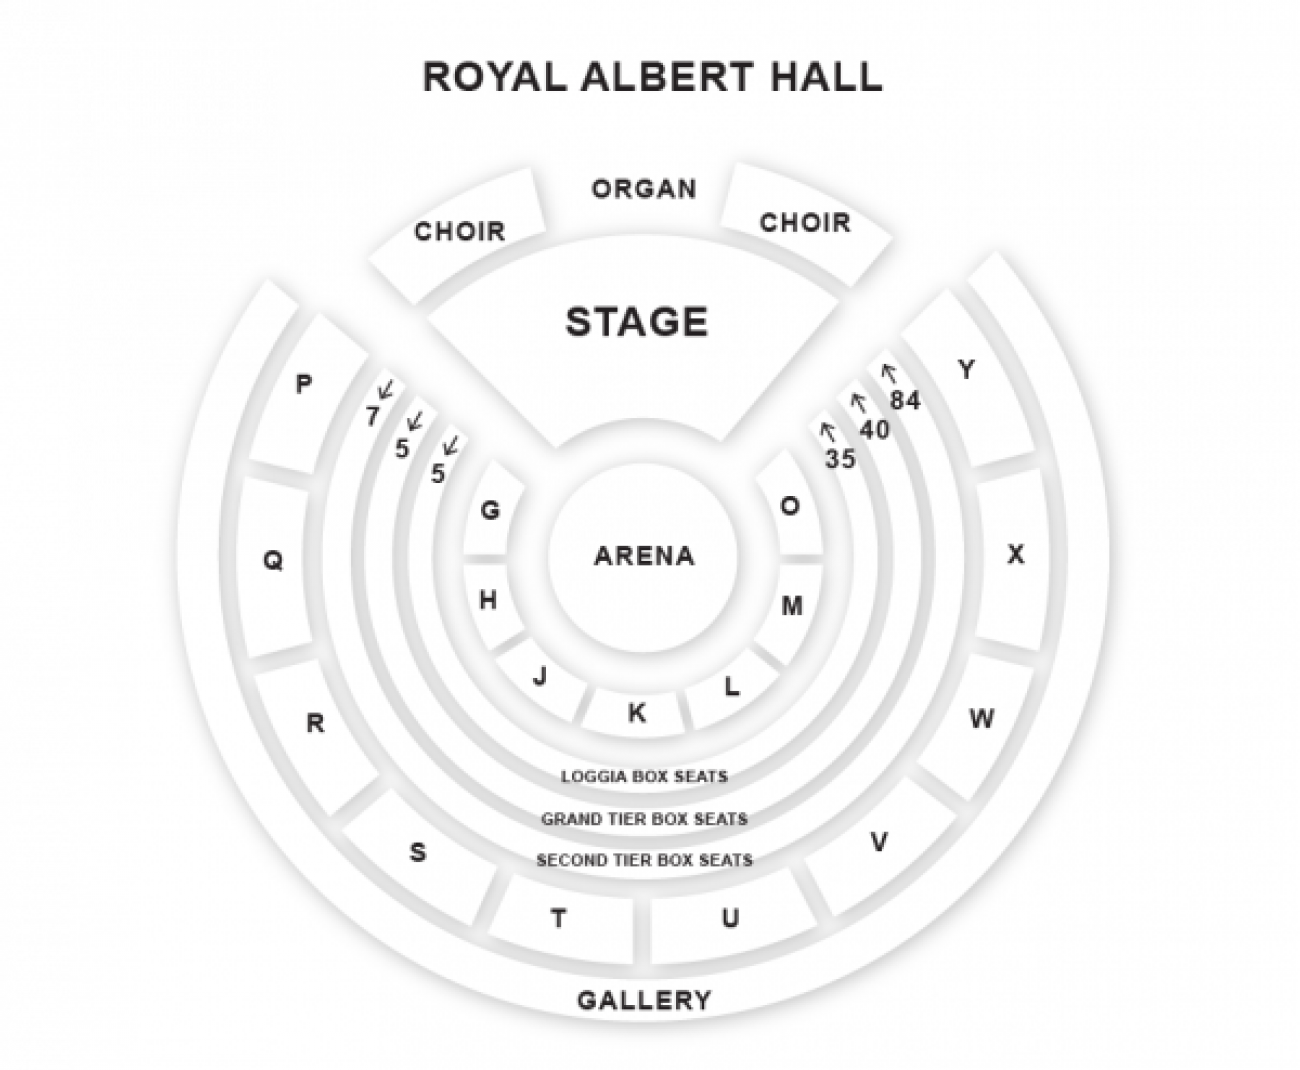 Royal Albert Hall - Plan de Salle